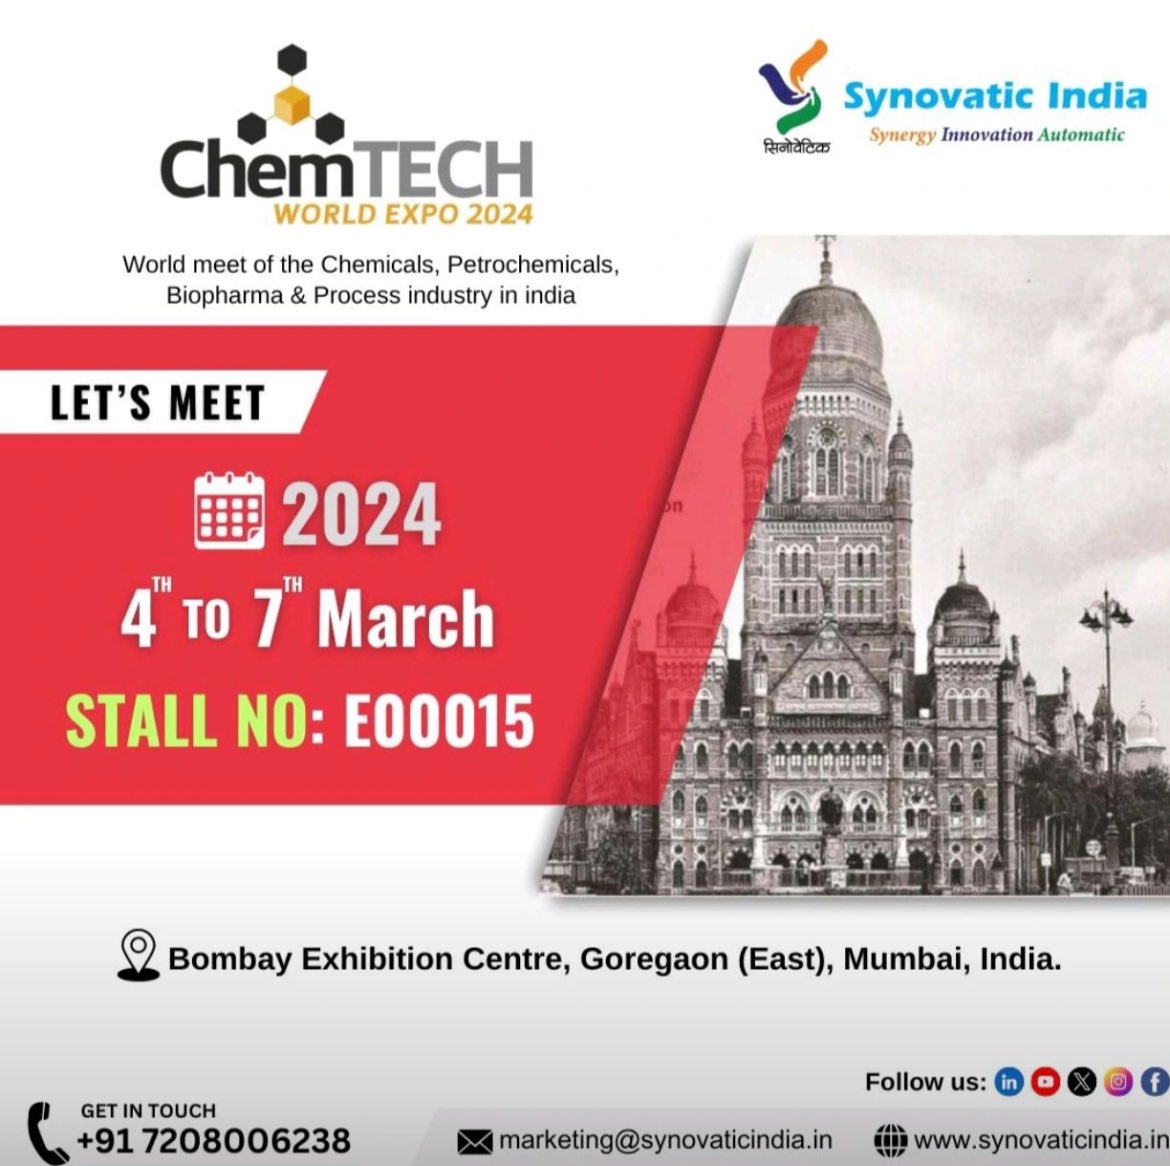 Let’s meet…
#Chemtech #Chemtech2024 #synovaticindia